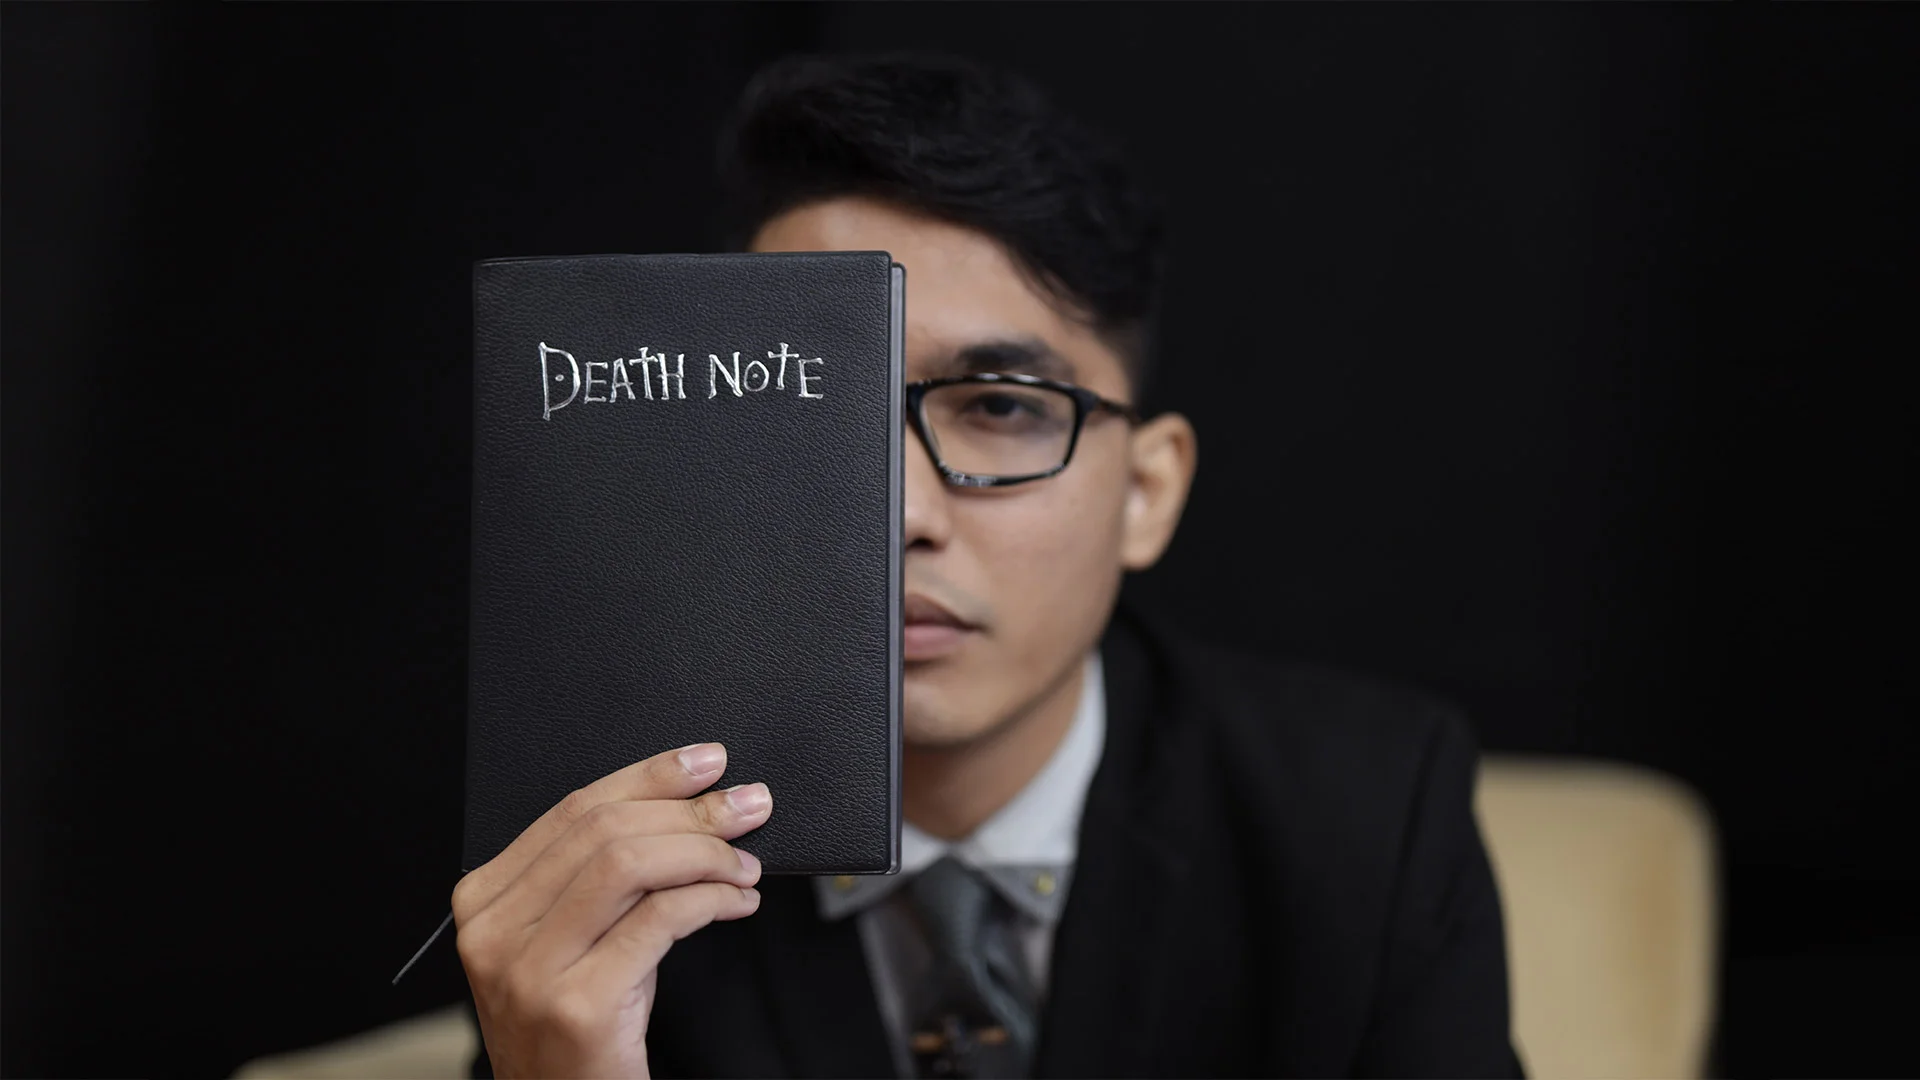 death note filme completo dublado online